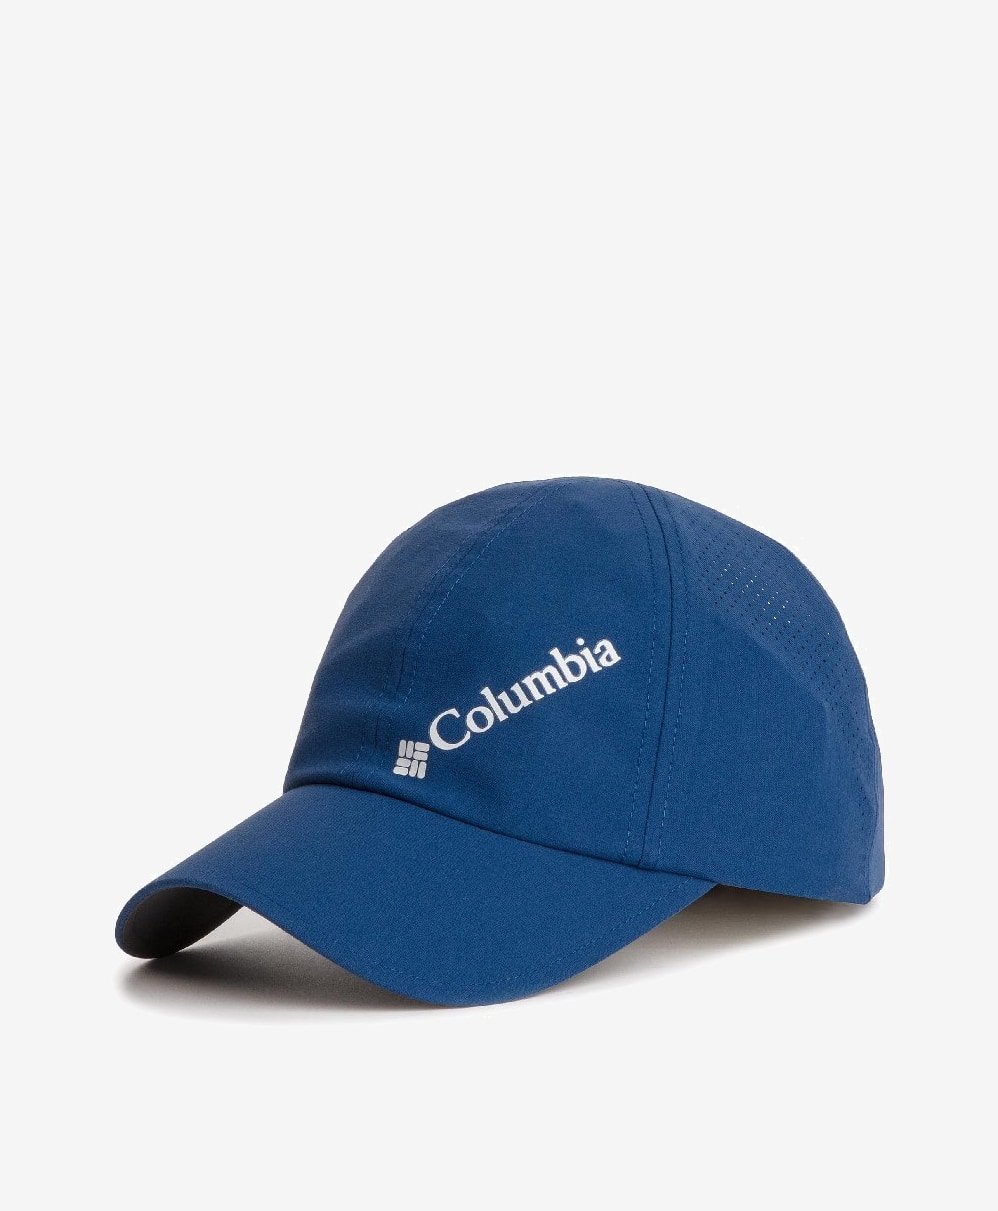 Ball cap. Бейсболка Columbia Tech Shade II Ball cap. Columbia Silver Ridge III Ball cap. Бейсболка Columbia Silver Ridge III Ball cap. Кепка Columbia Athletic Sports Wear.